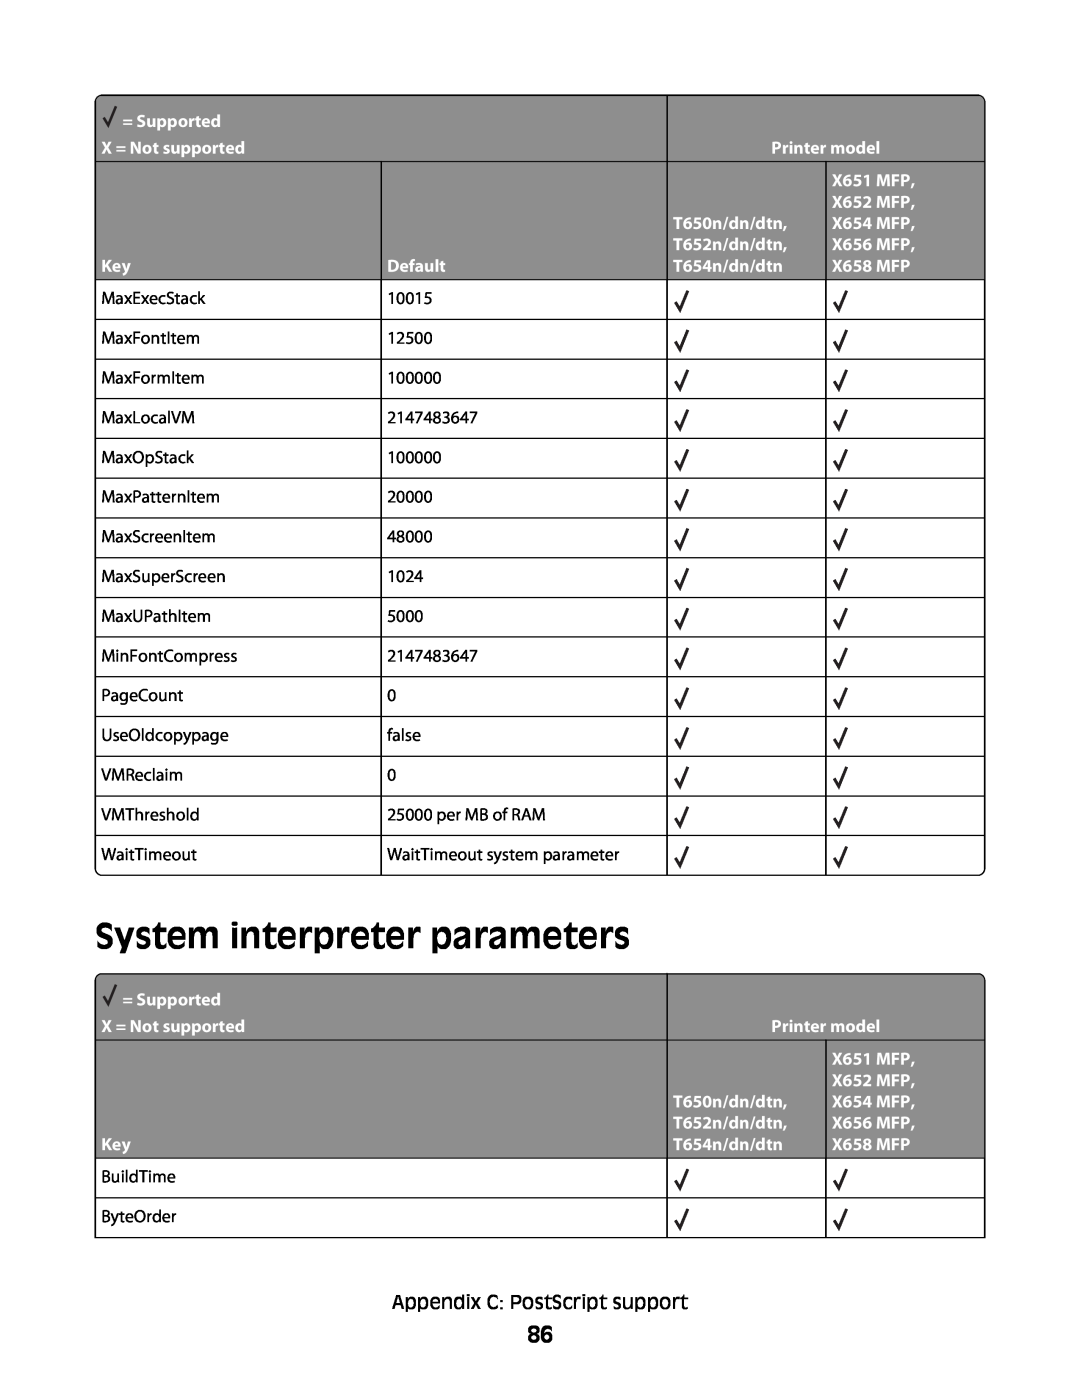 Lexmark X654 MFP, X652 MFP, X651 MFP, X658 MFP, X656 MFP manual System interpreter parameters, Appendix C PostScript support 